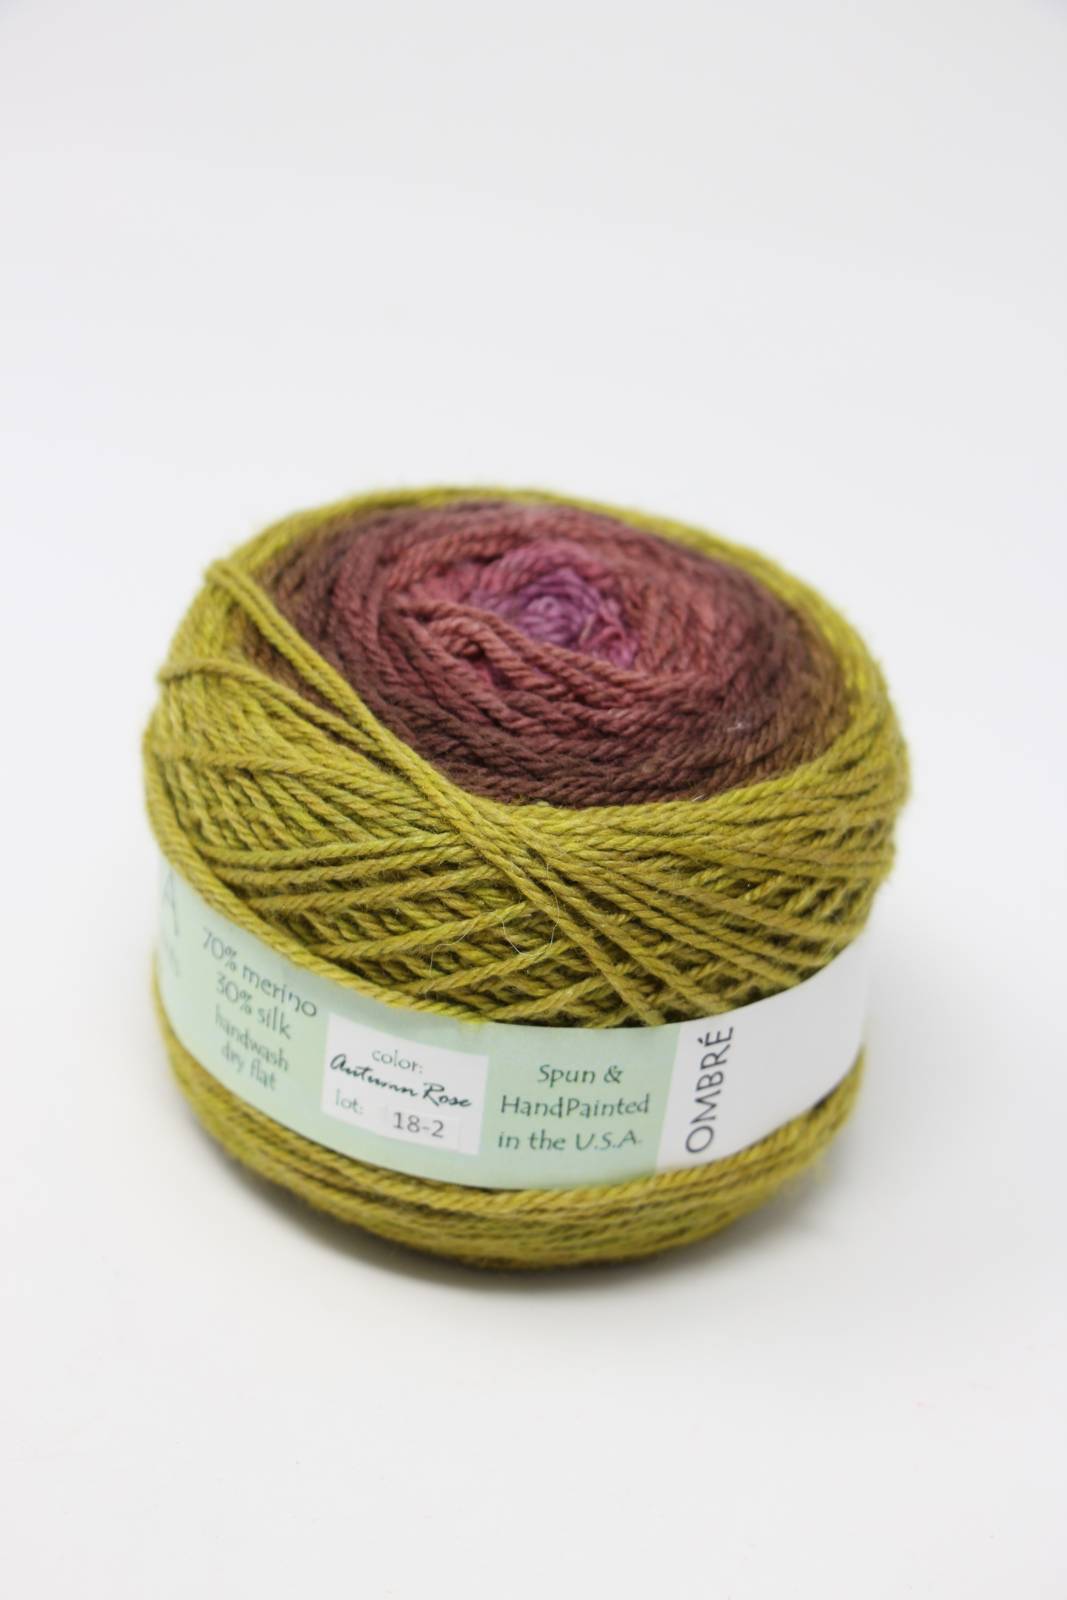  Silk Wool Blend Yarn Singles - Merino Silk Yarn, Sport